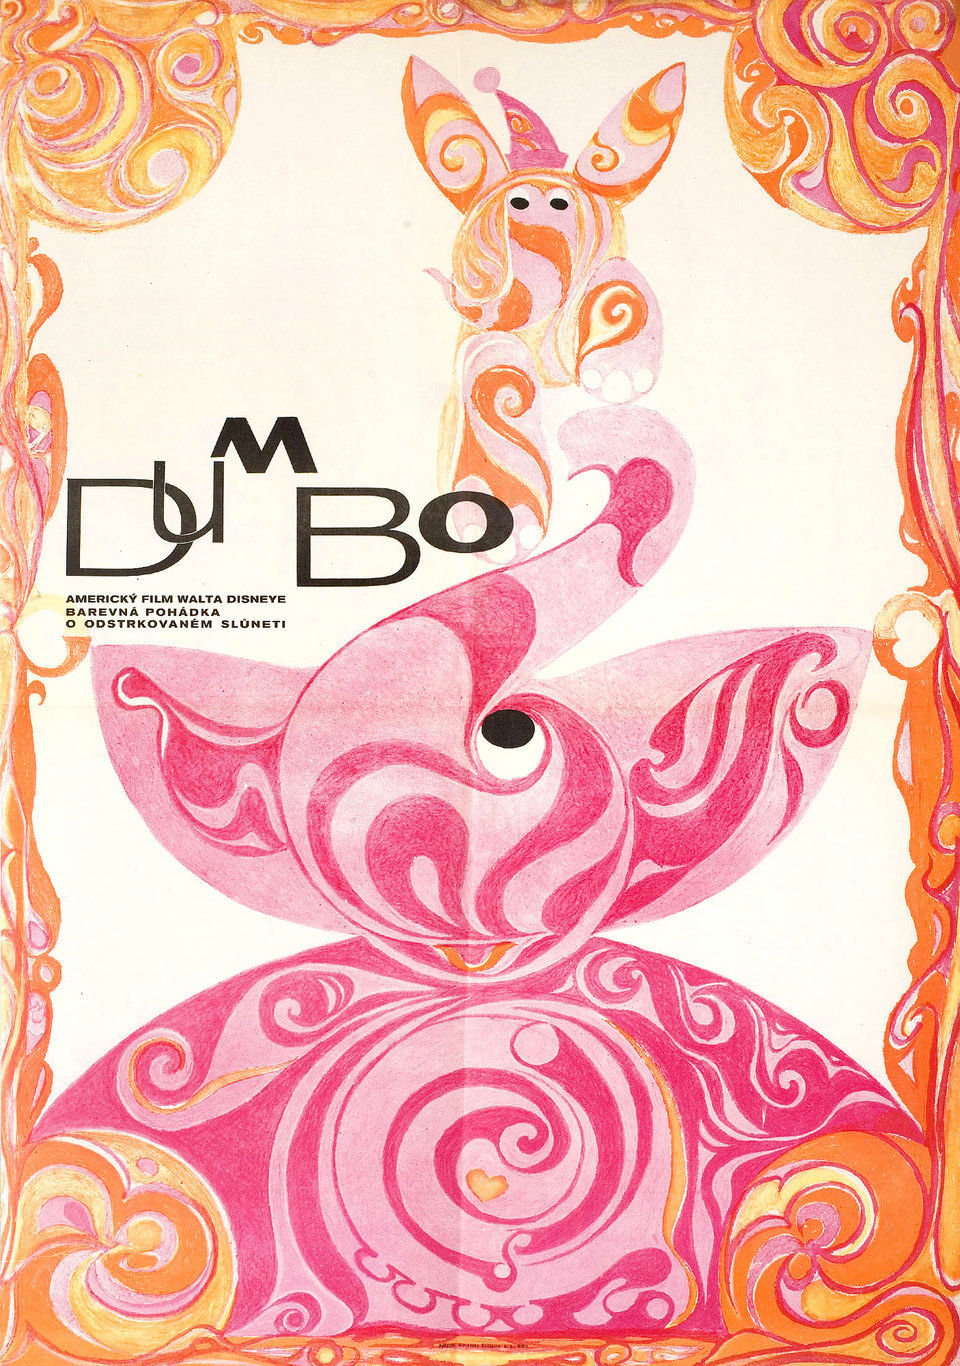 dumbo-1960s-original-czech-republic-movie-poster